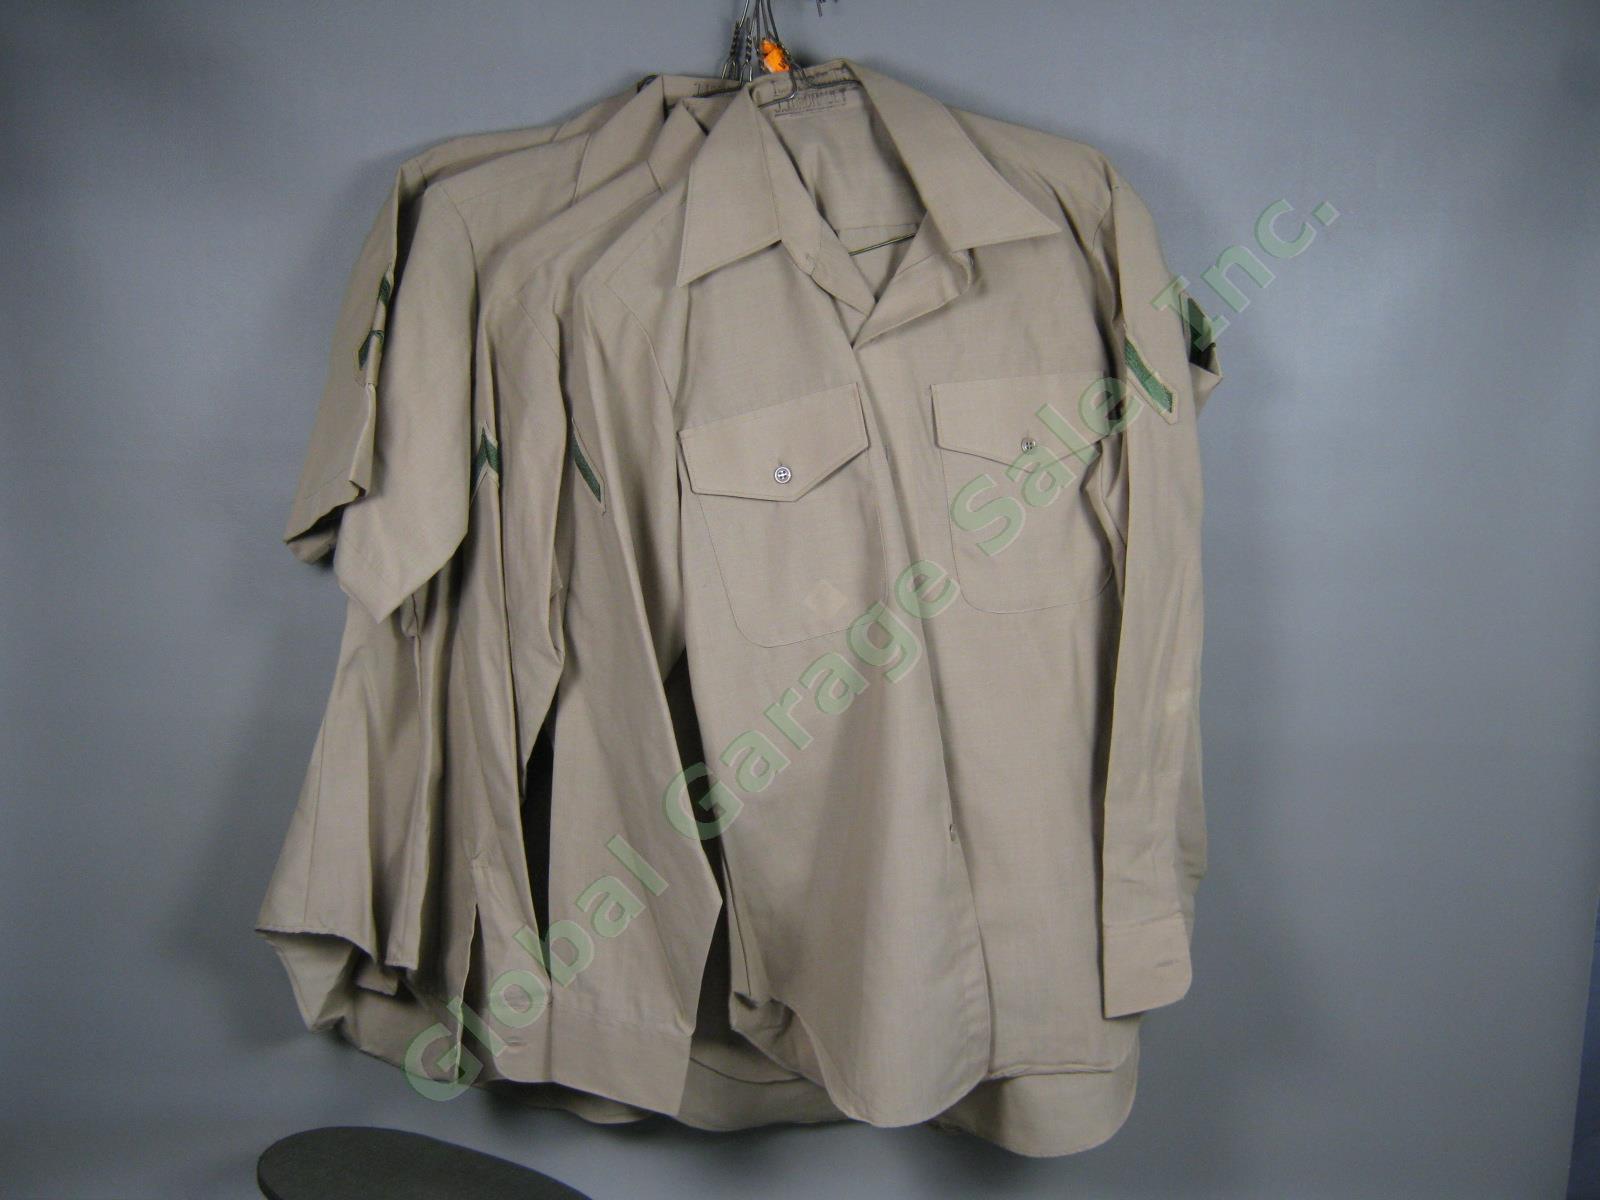 Huge USMC Marine Corps Charlie Uniform Pants Jackets Shirts Cap Lot Never Worn! 4